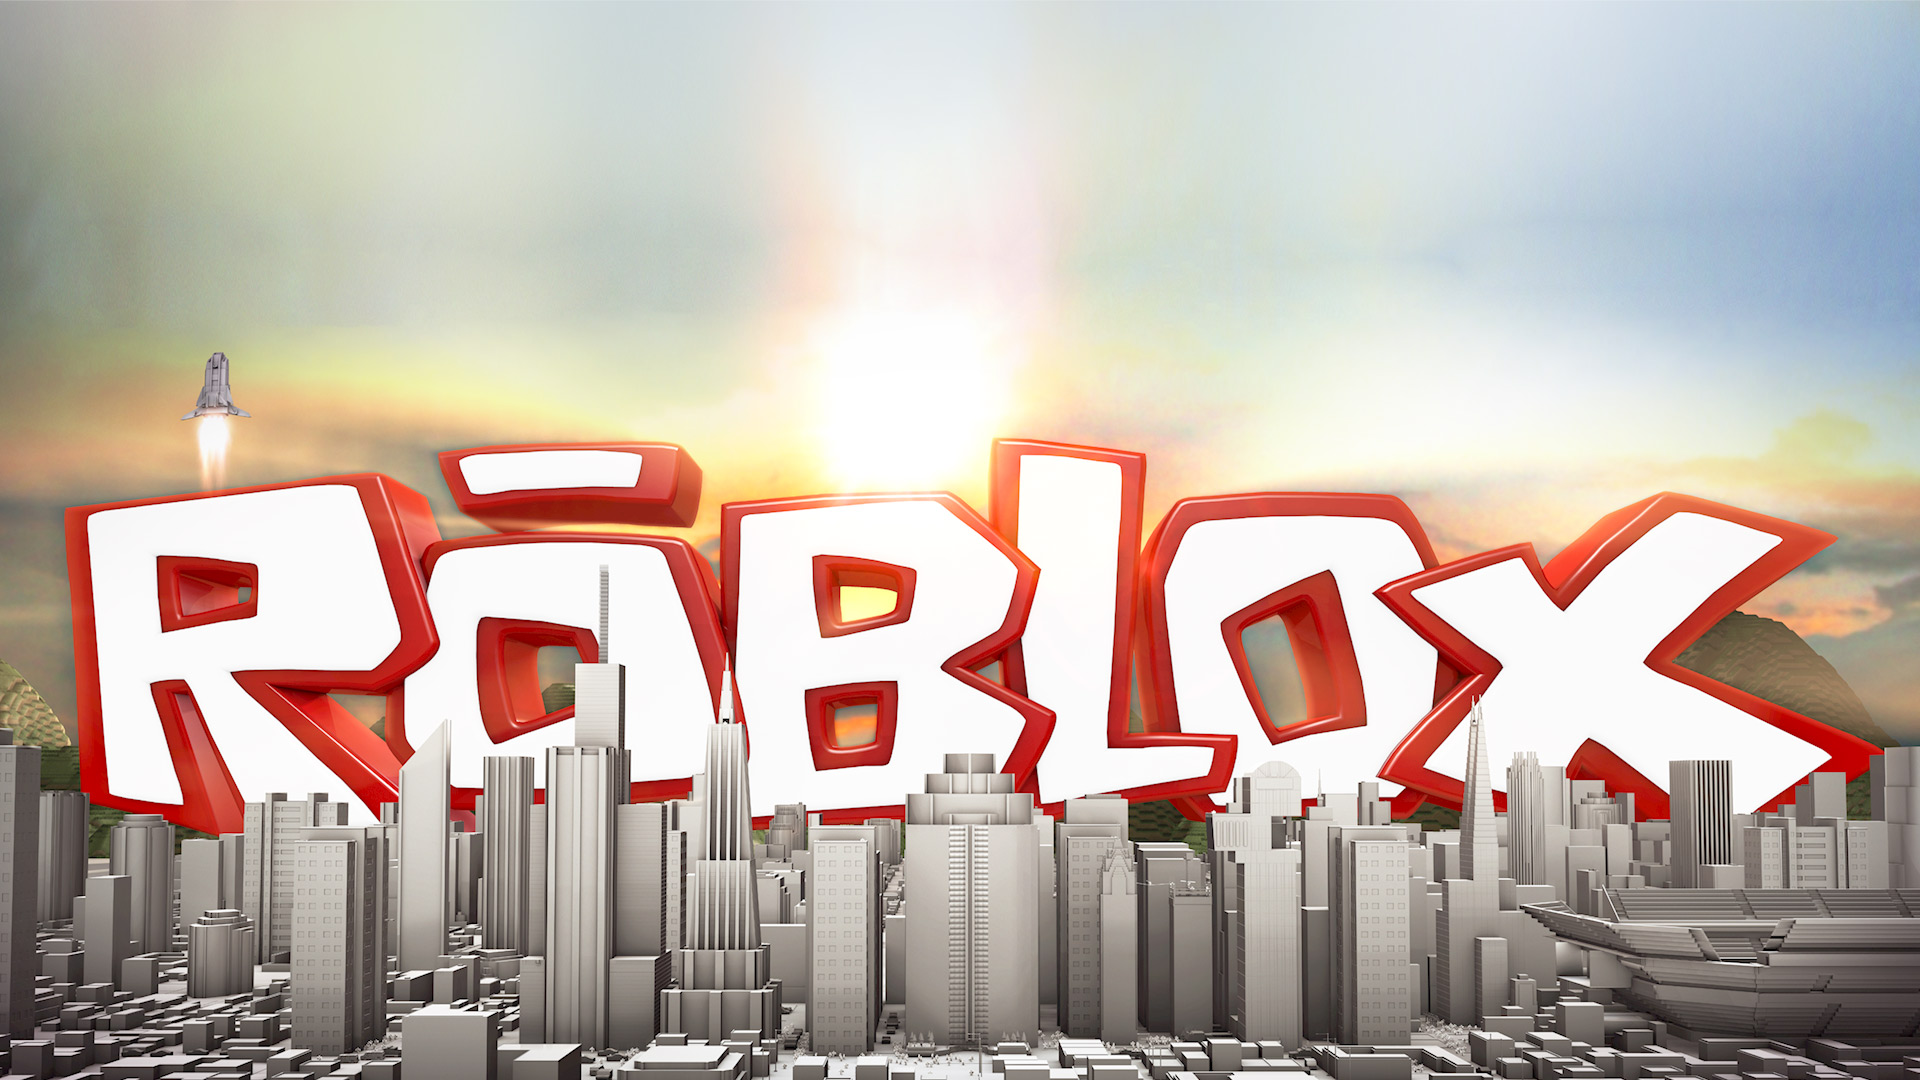 TheGamer101's ROBLOX Tablet, Roblox Wiki